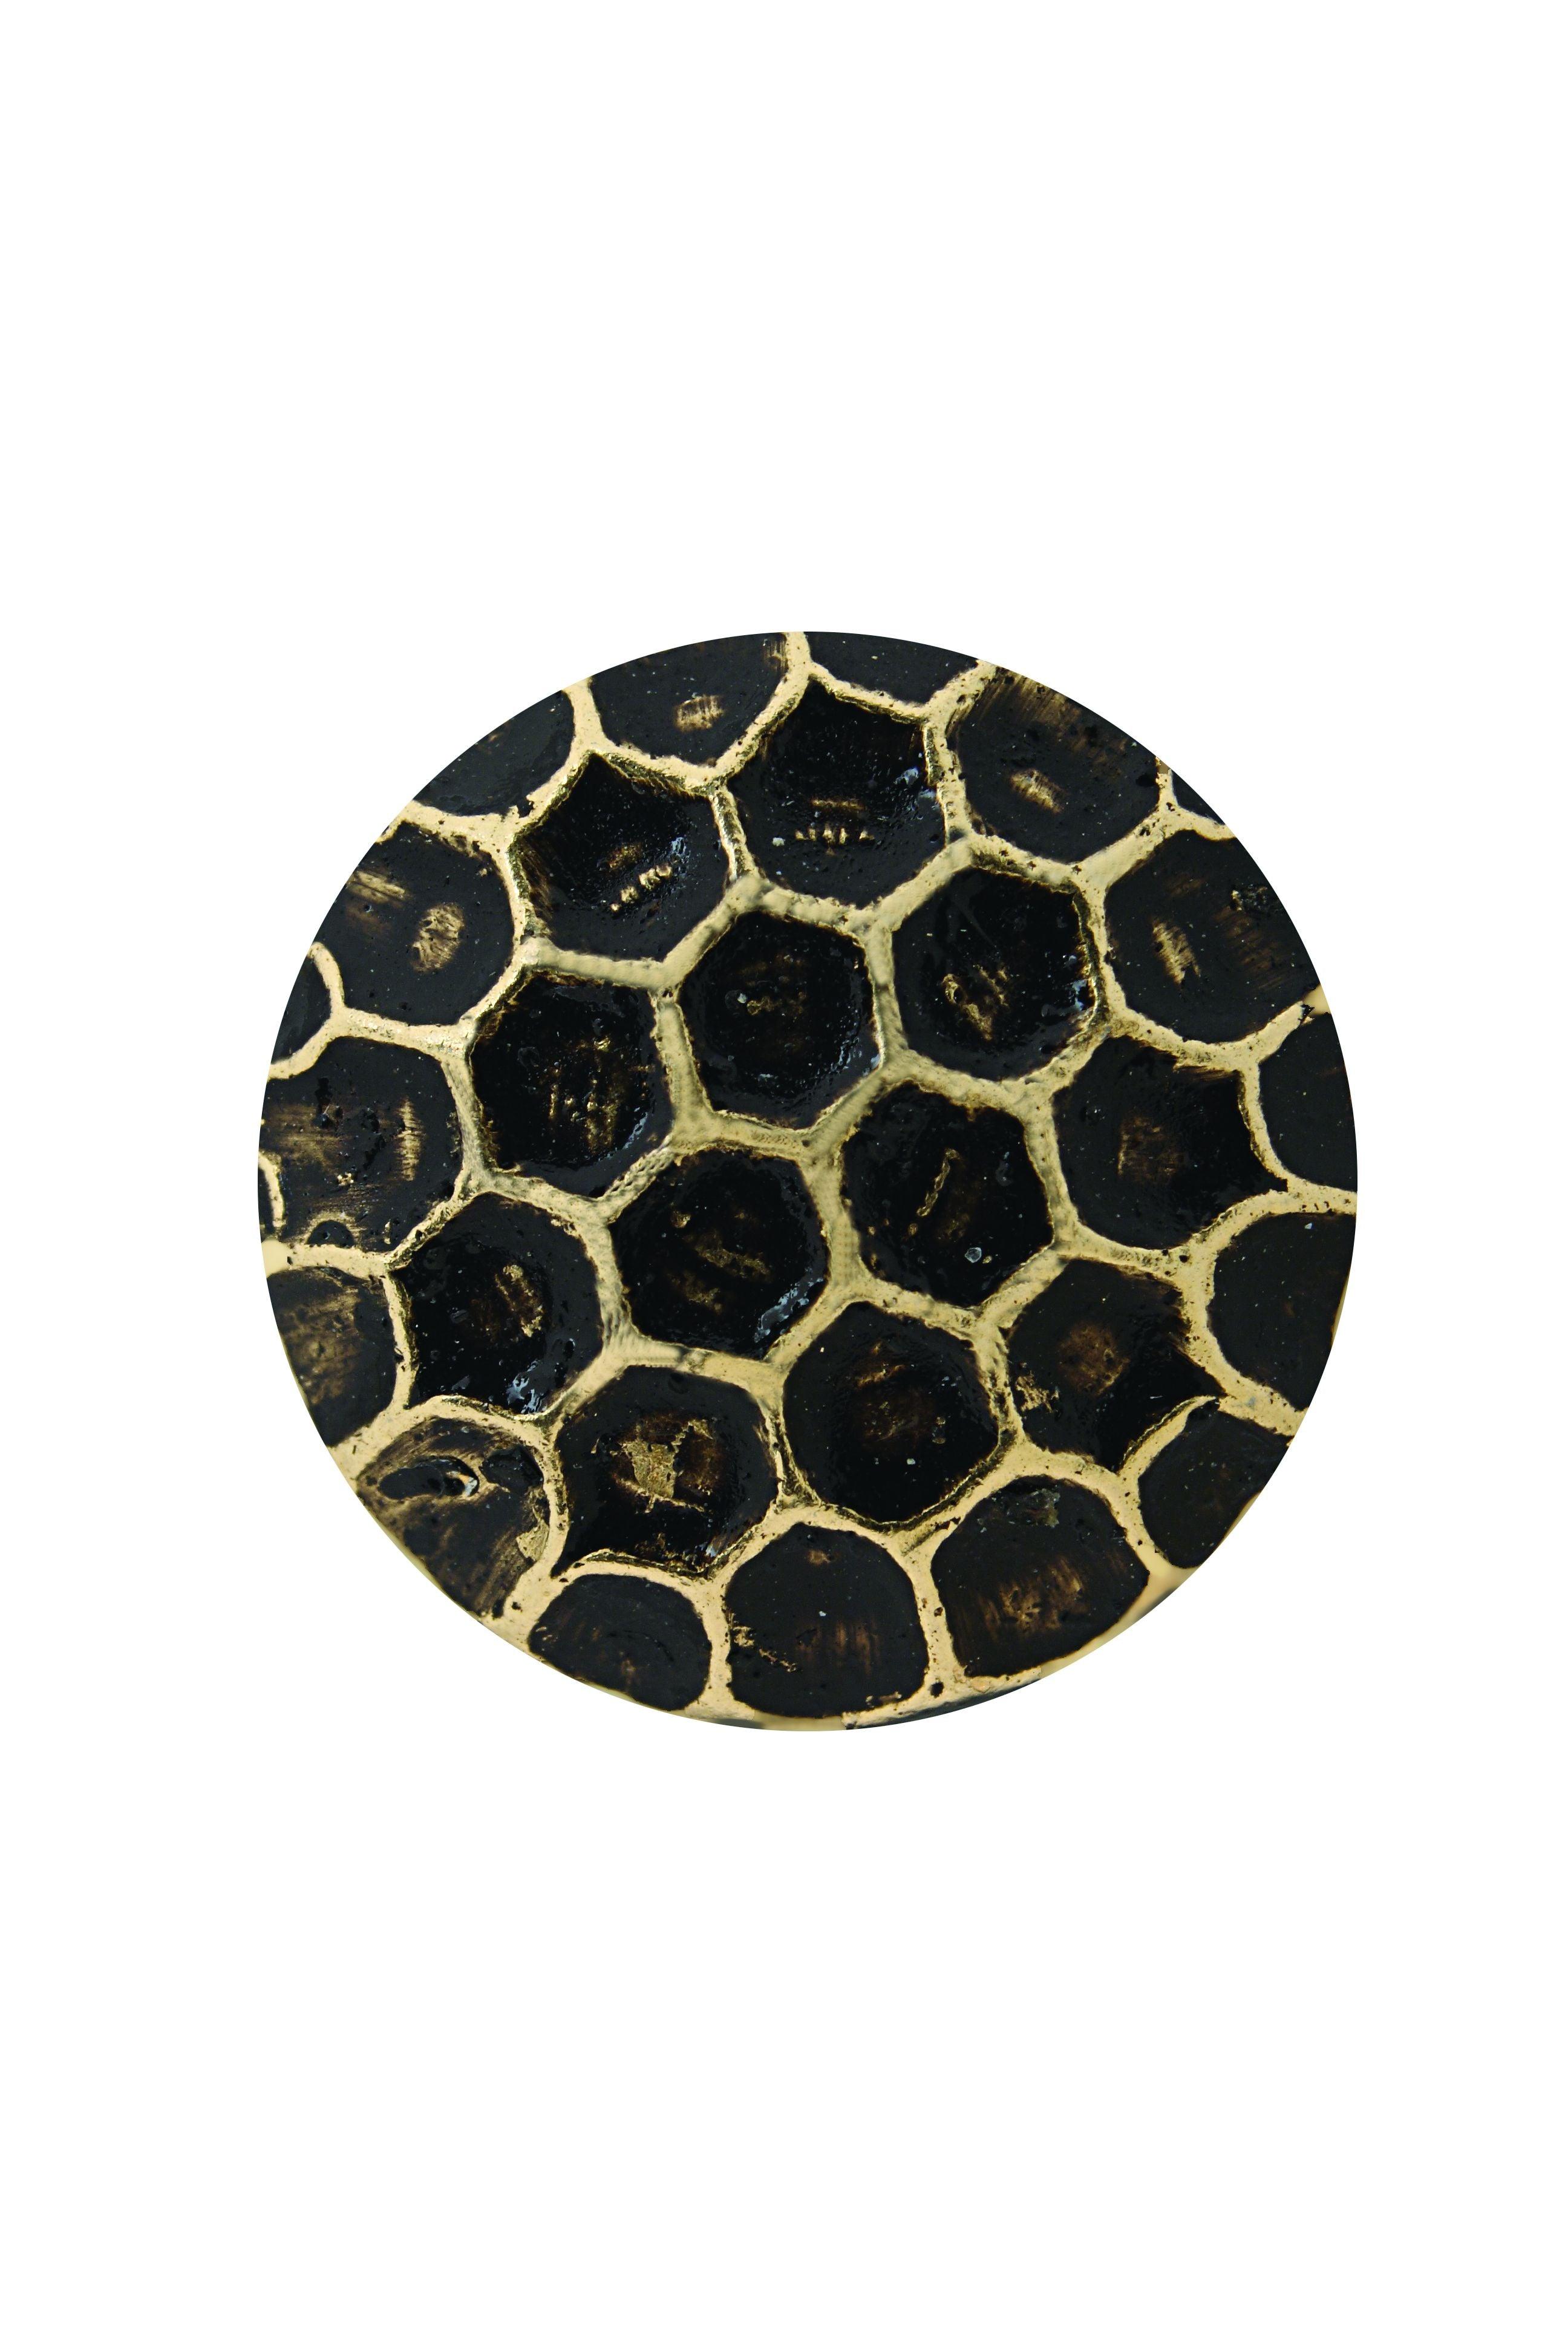 C.S. Osborne Upholstery Nails - Honey Comb Bronze - Alan Richard Textiles, LTD C.S. Osborne Decorative Nails